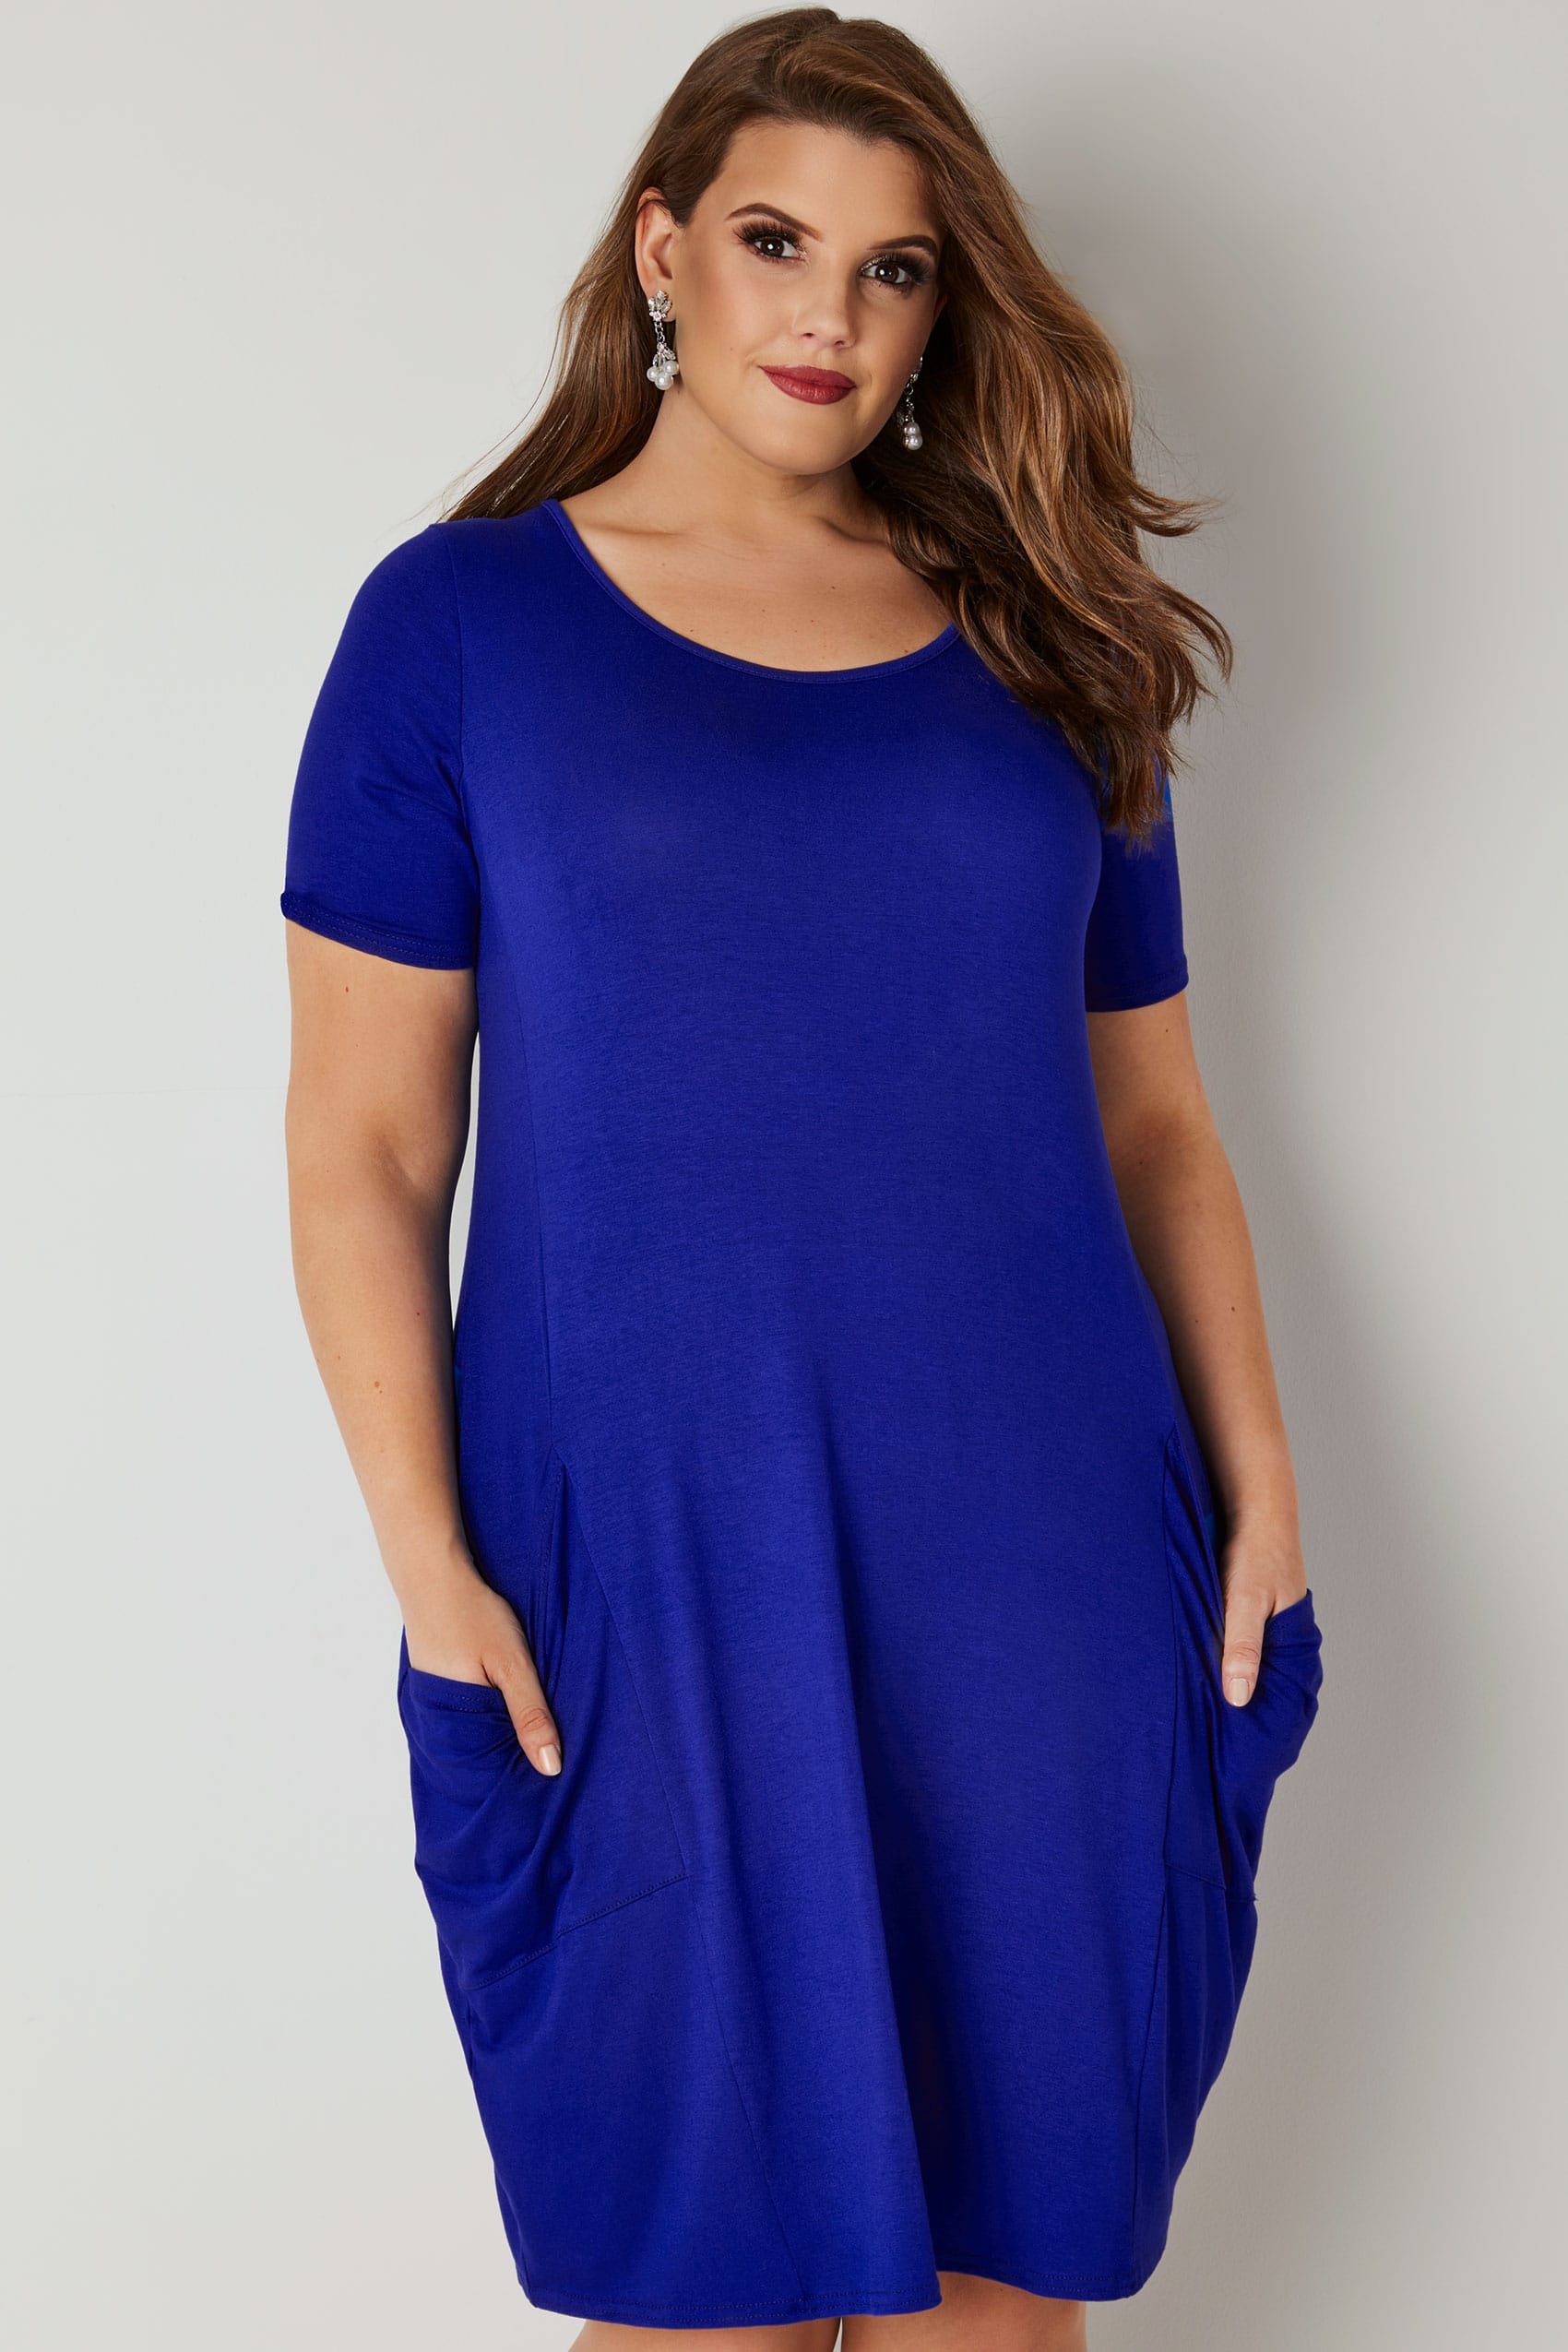 Cobalt Blue Draped Pocket Jersey Dress, plus size 16 to 36